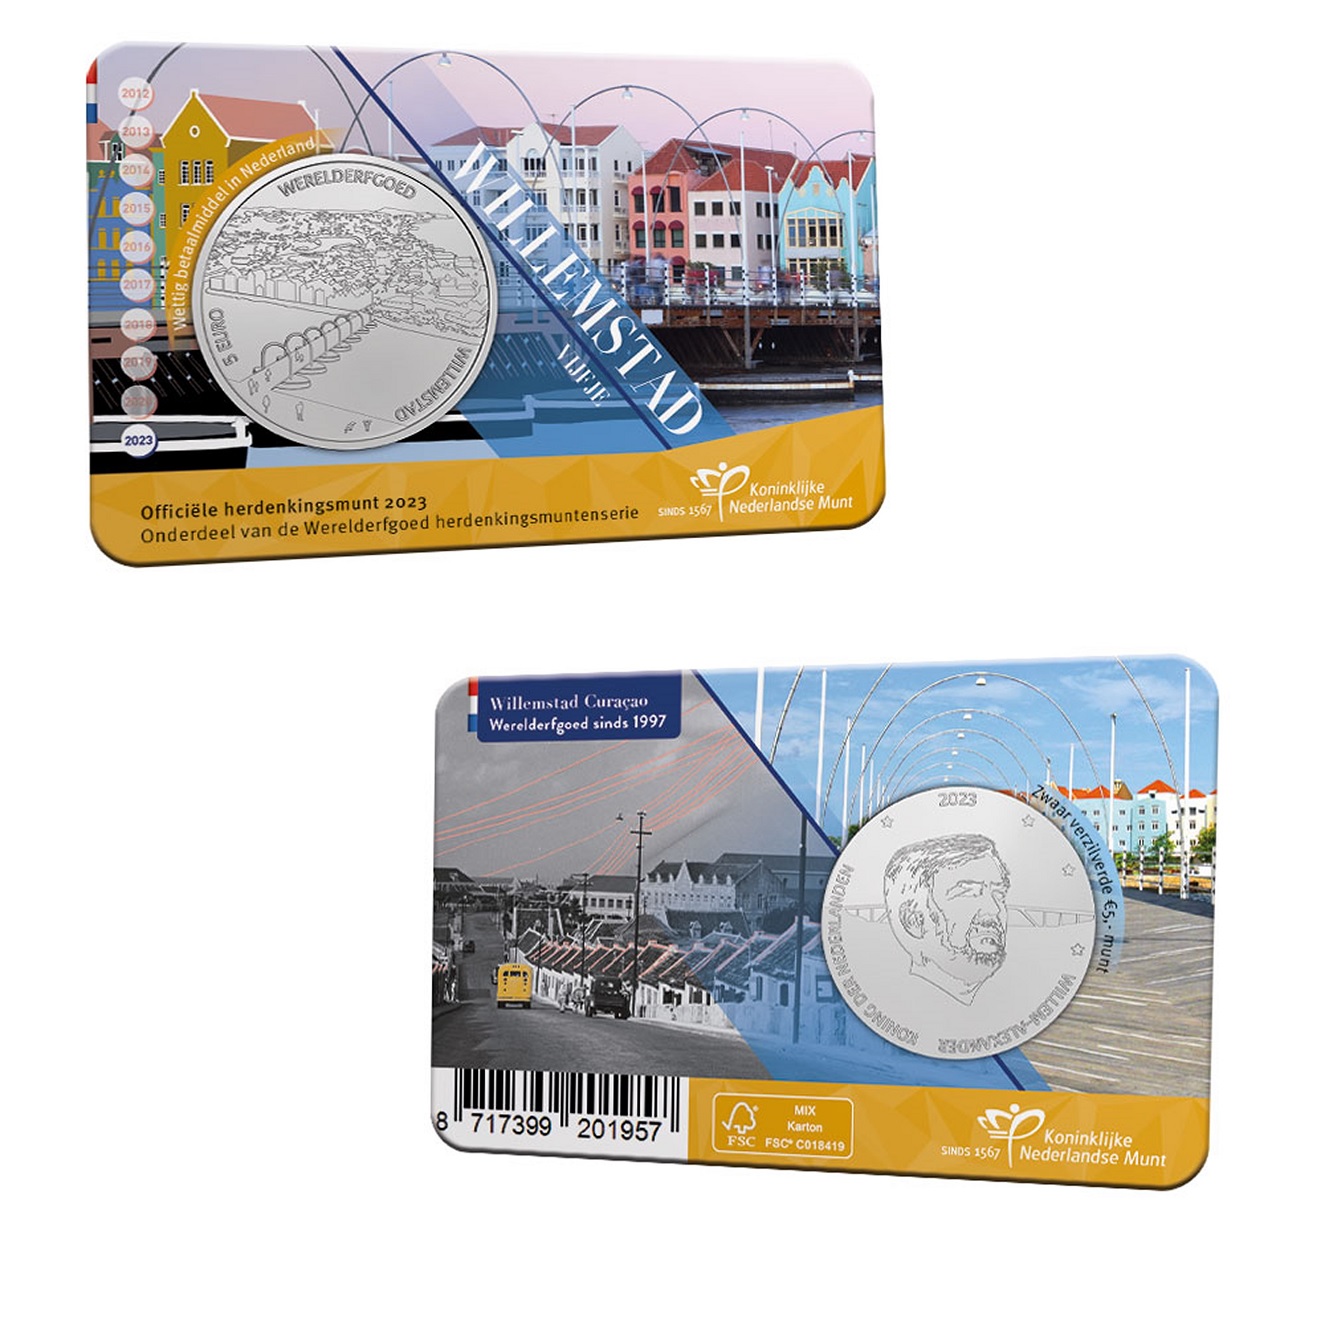 (EUR14.Unc.2023.0115396) 5 € Netherlands 2023 UNC - Willemstad (card) (zoom)